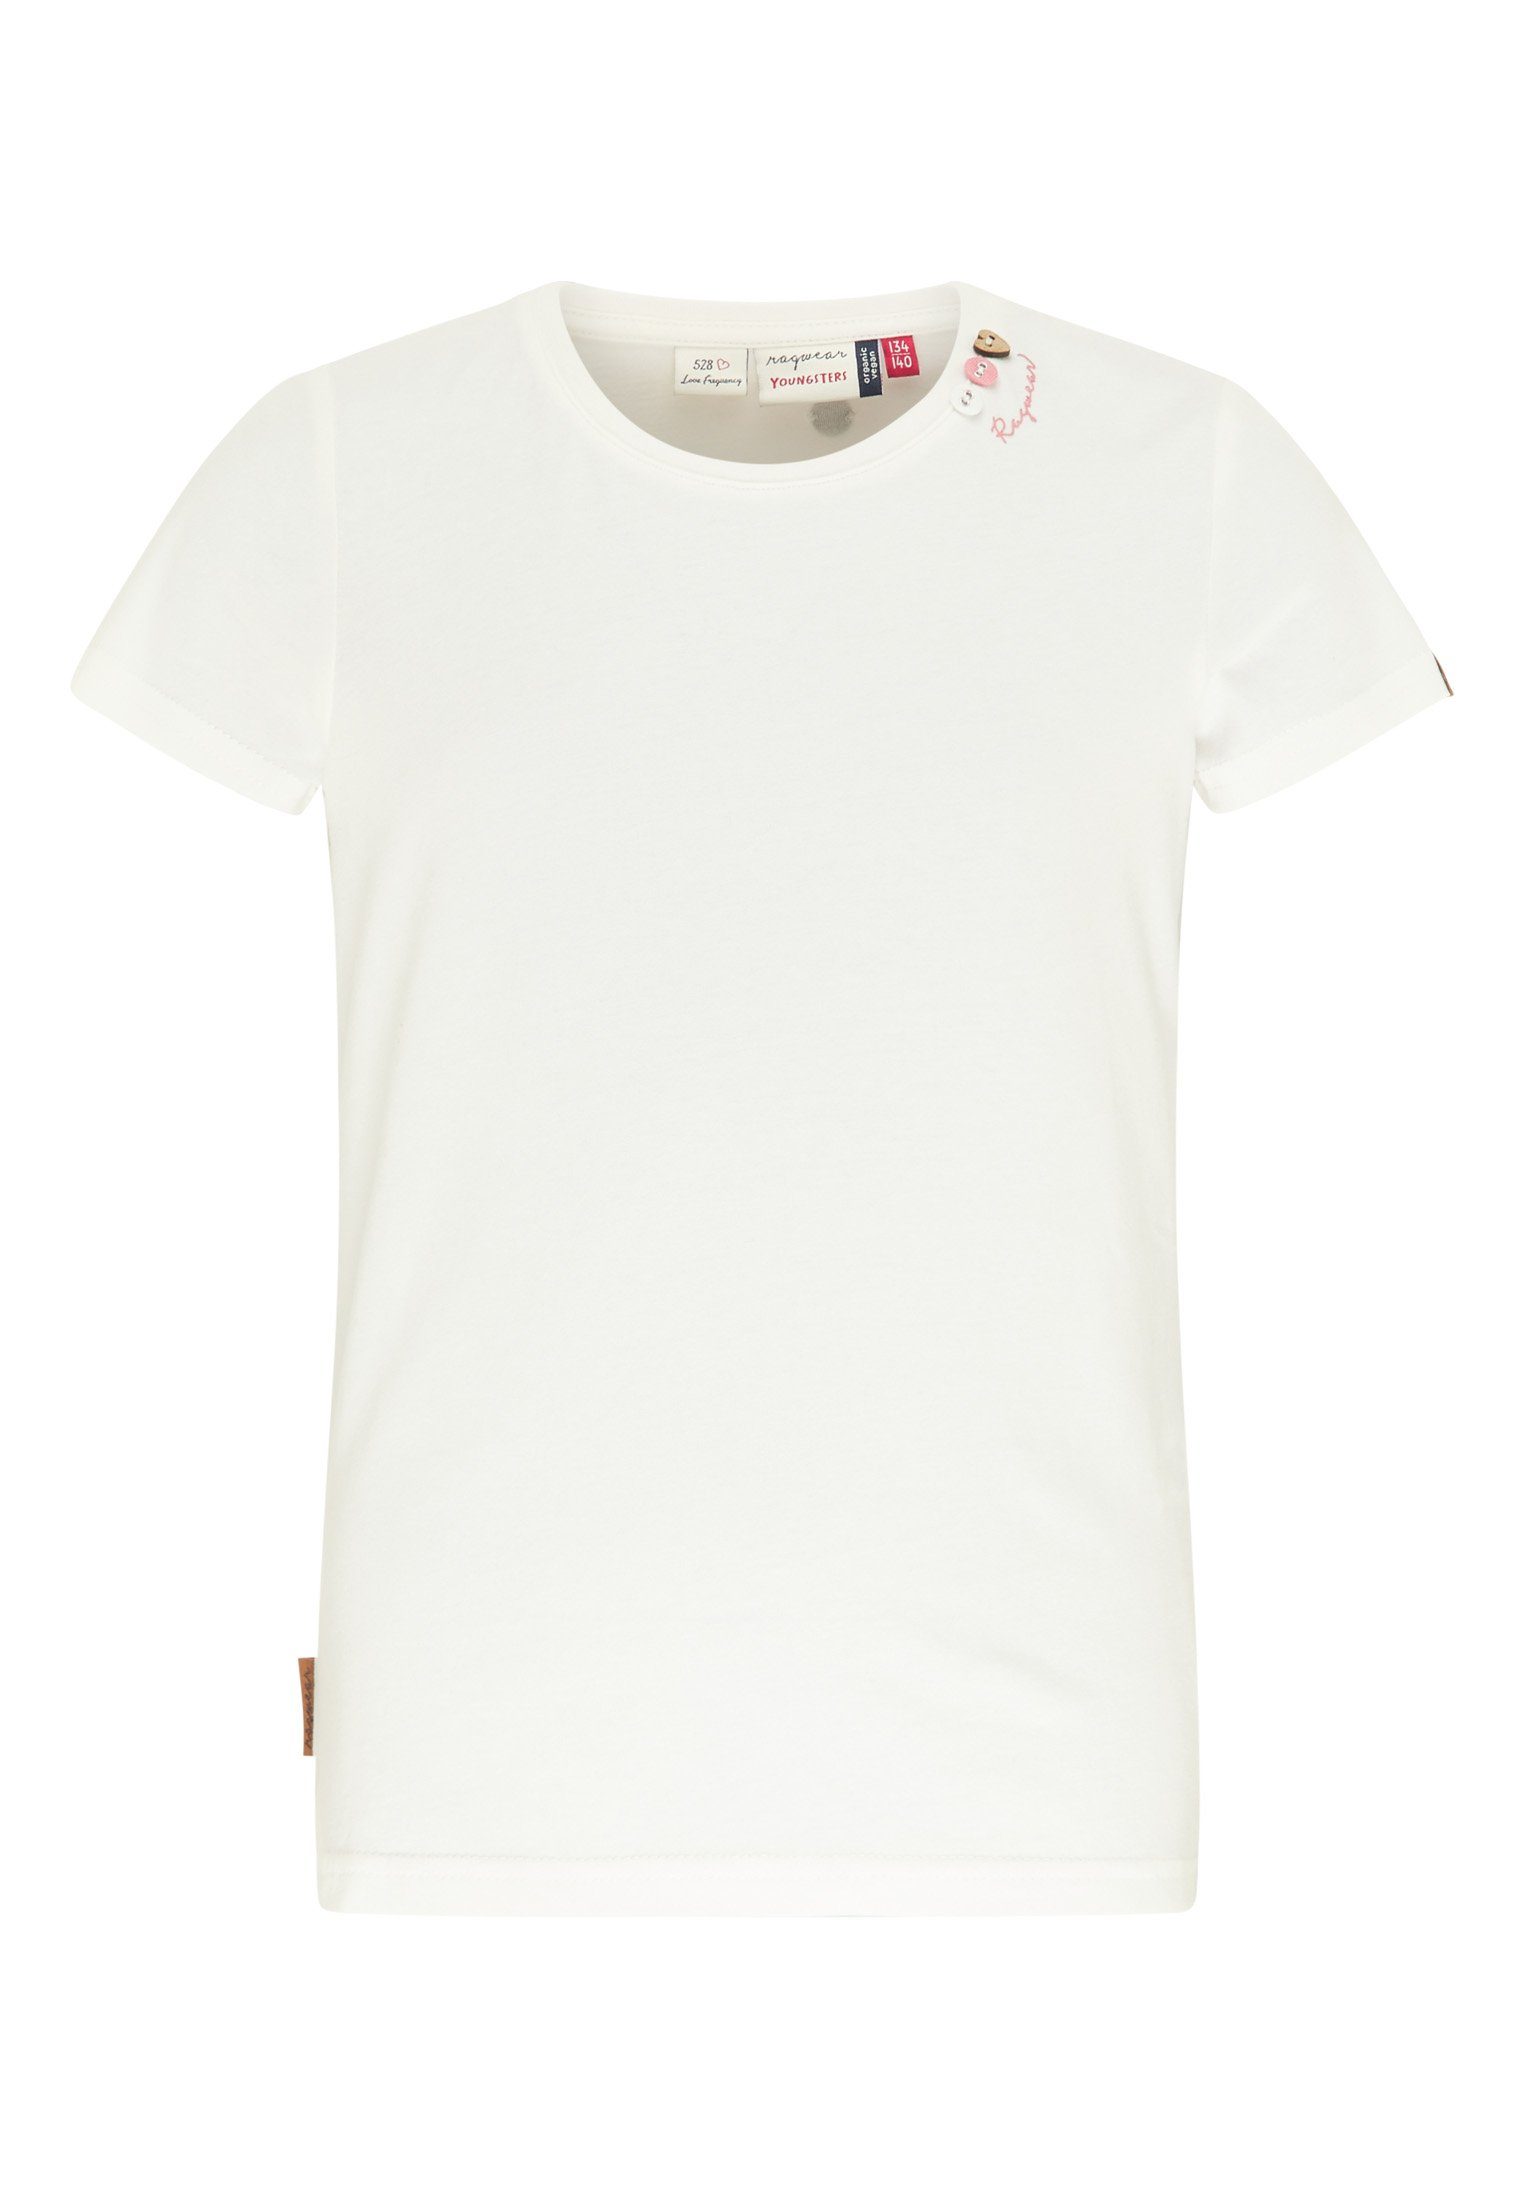 T-Shirt Nachhaltige VIOLKA Vegane WHITE & ORGANIC Mode Ragwear